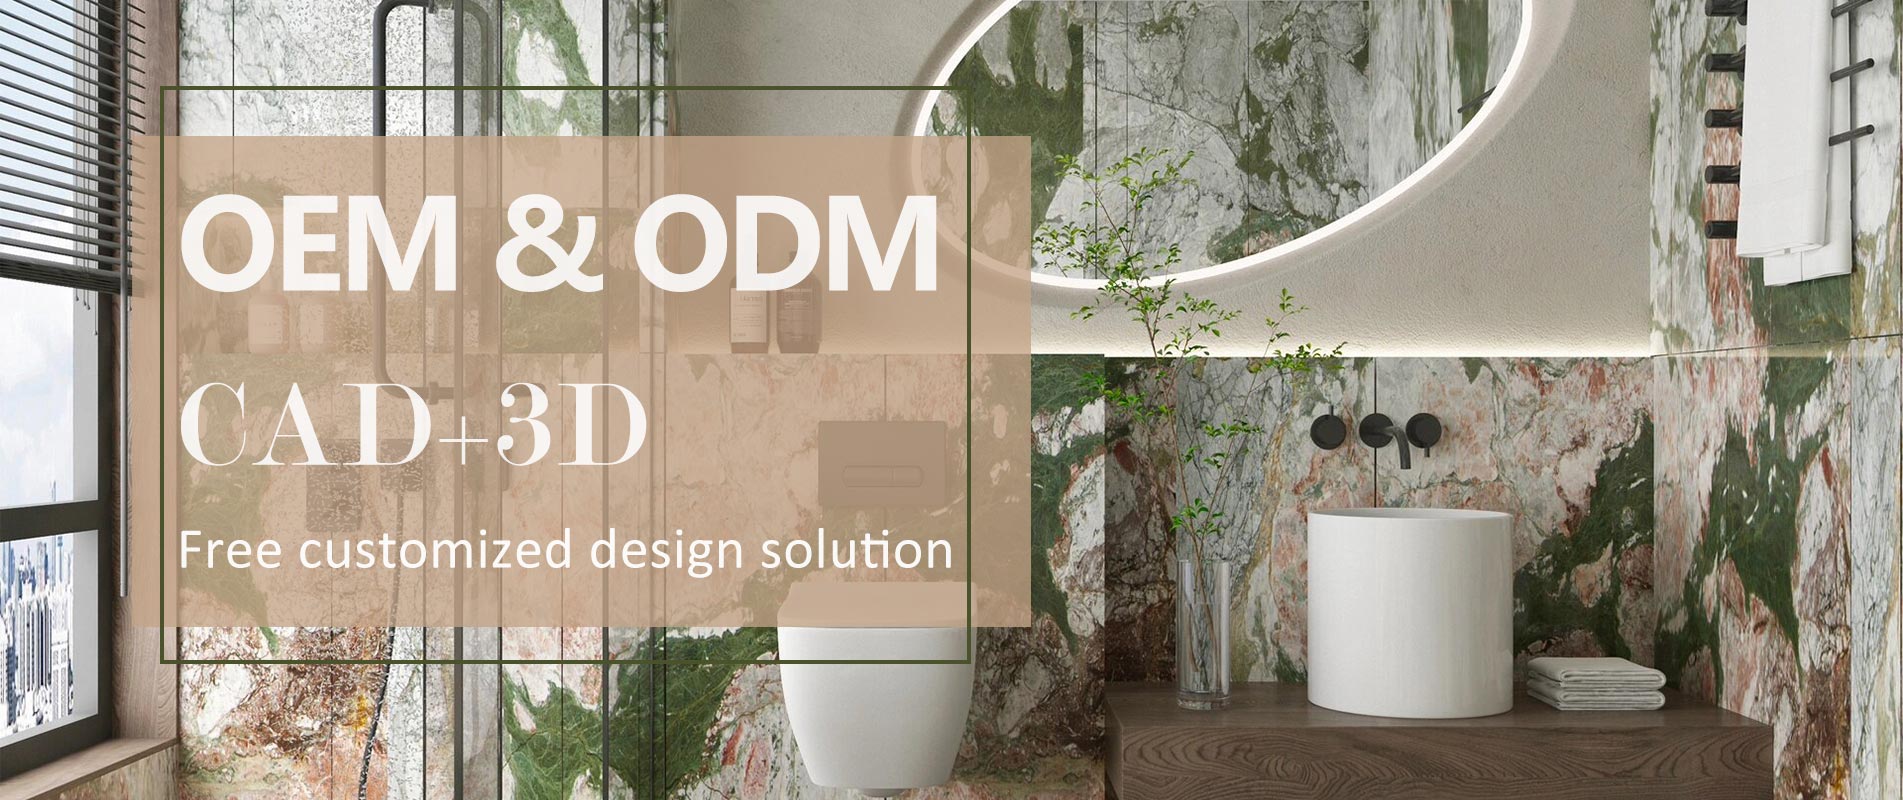 OEM&ODM+CAD